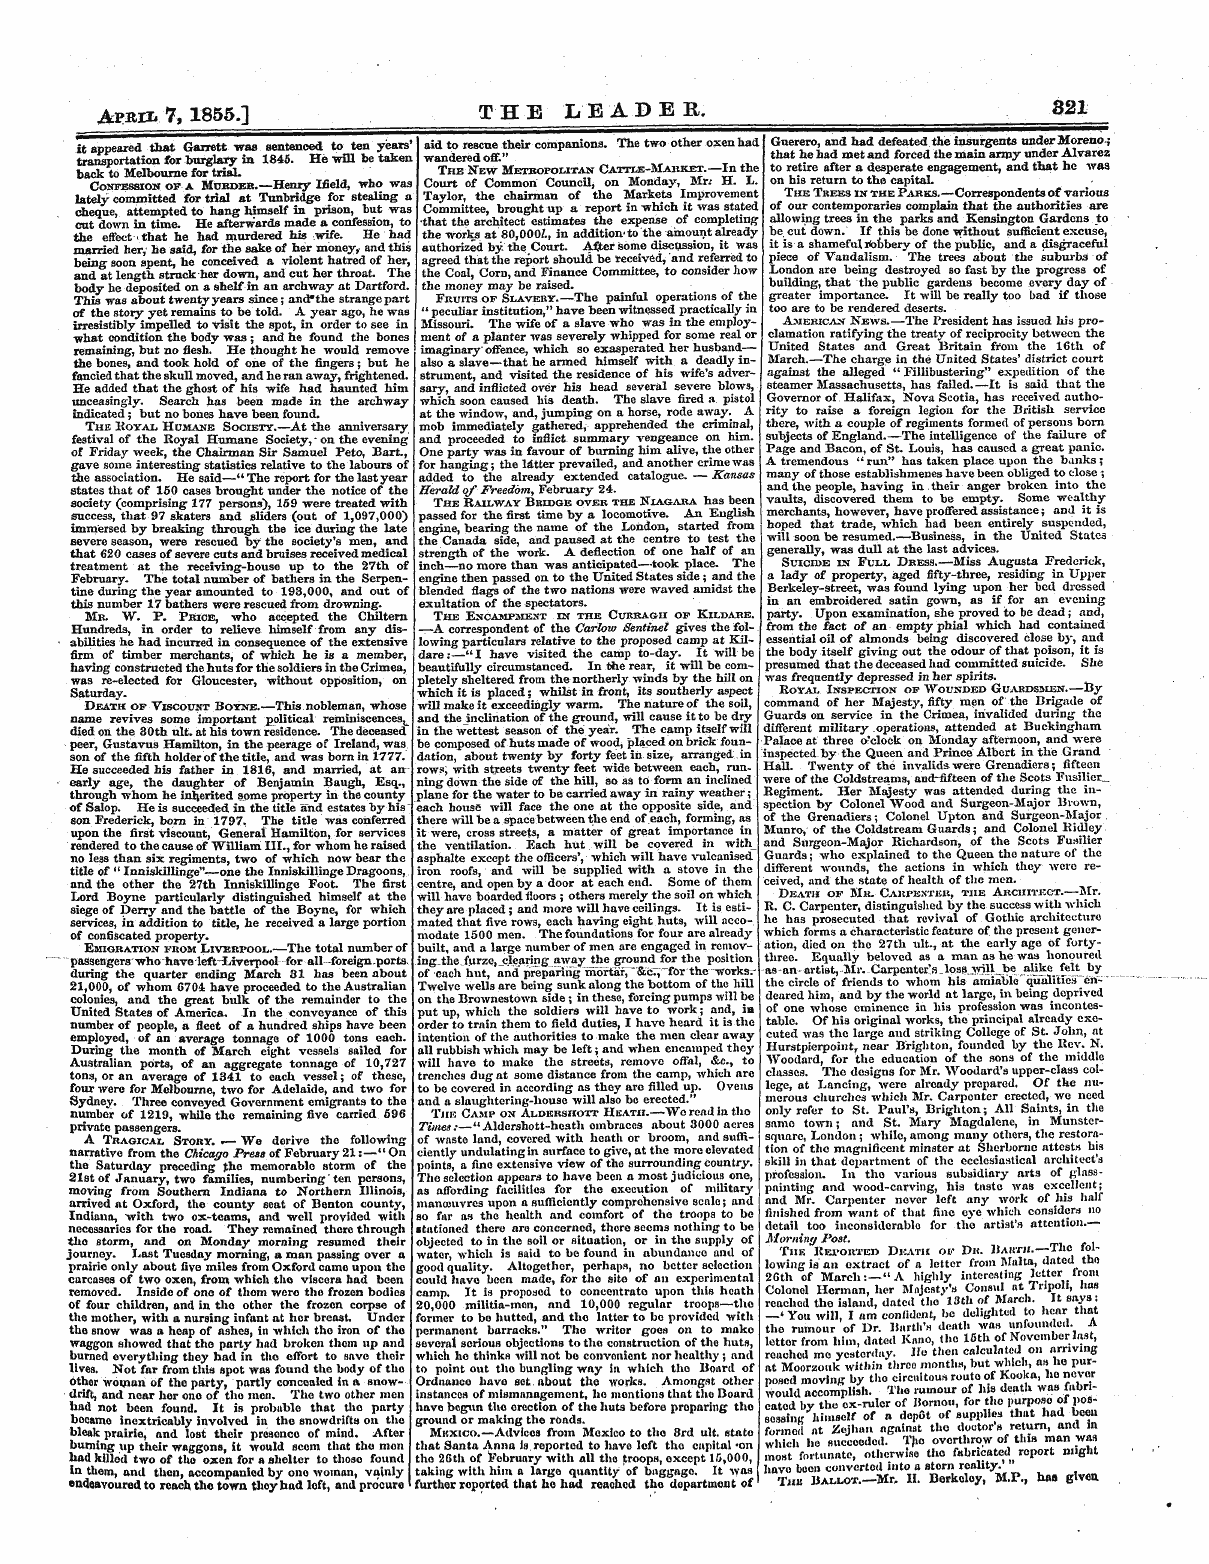 Leader (1850-1860): jS F Y, 2nd edition - Apbi* 7,1855.] The Leader. 321